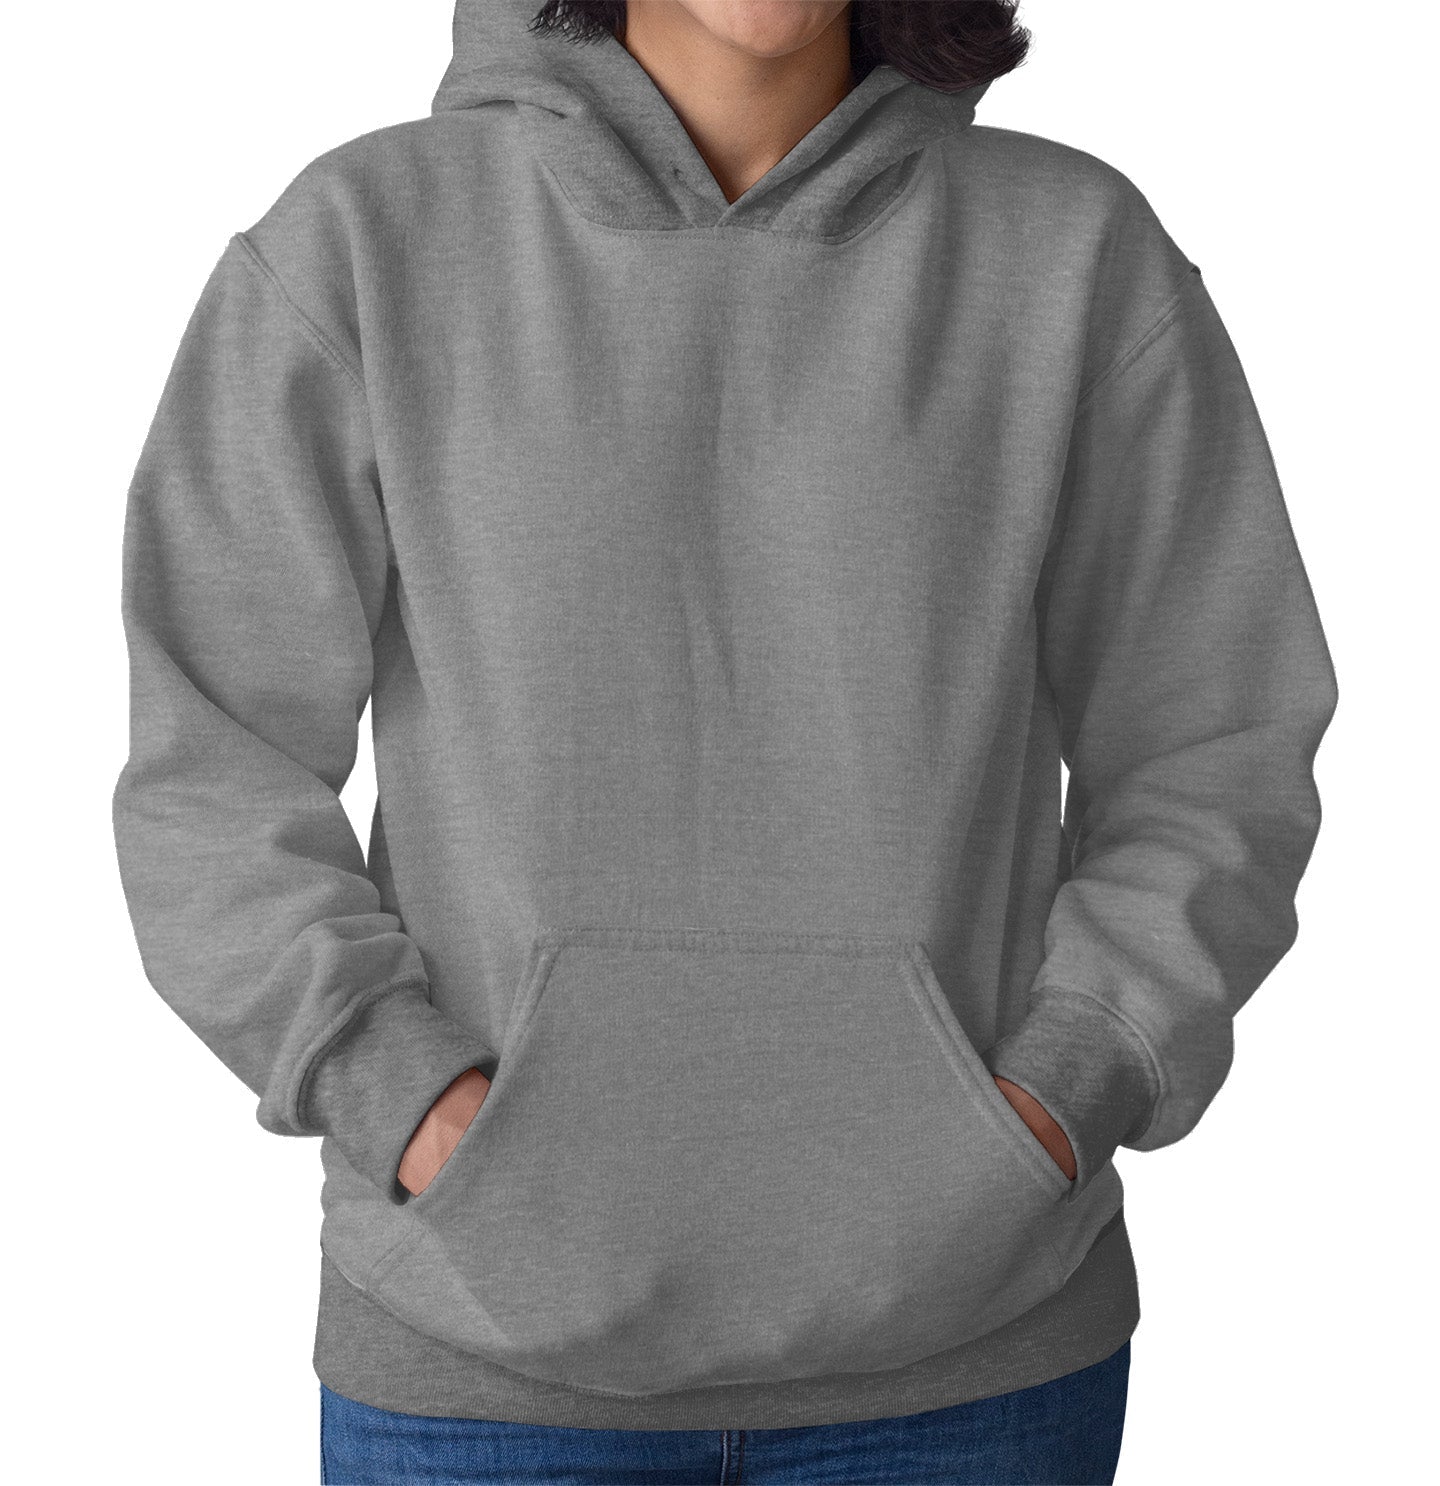 Golden Mom Illustration - Adult Unisex Hoodie Sweatshirt